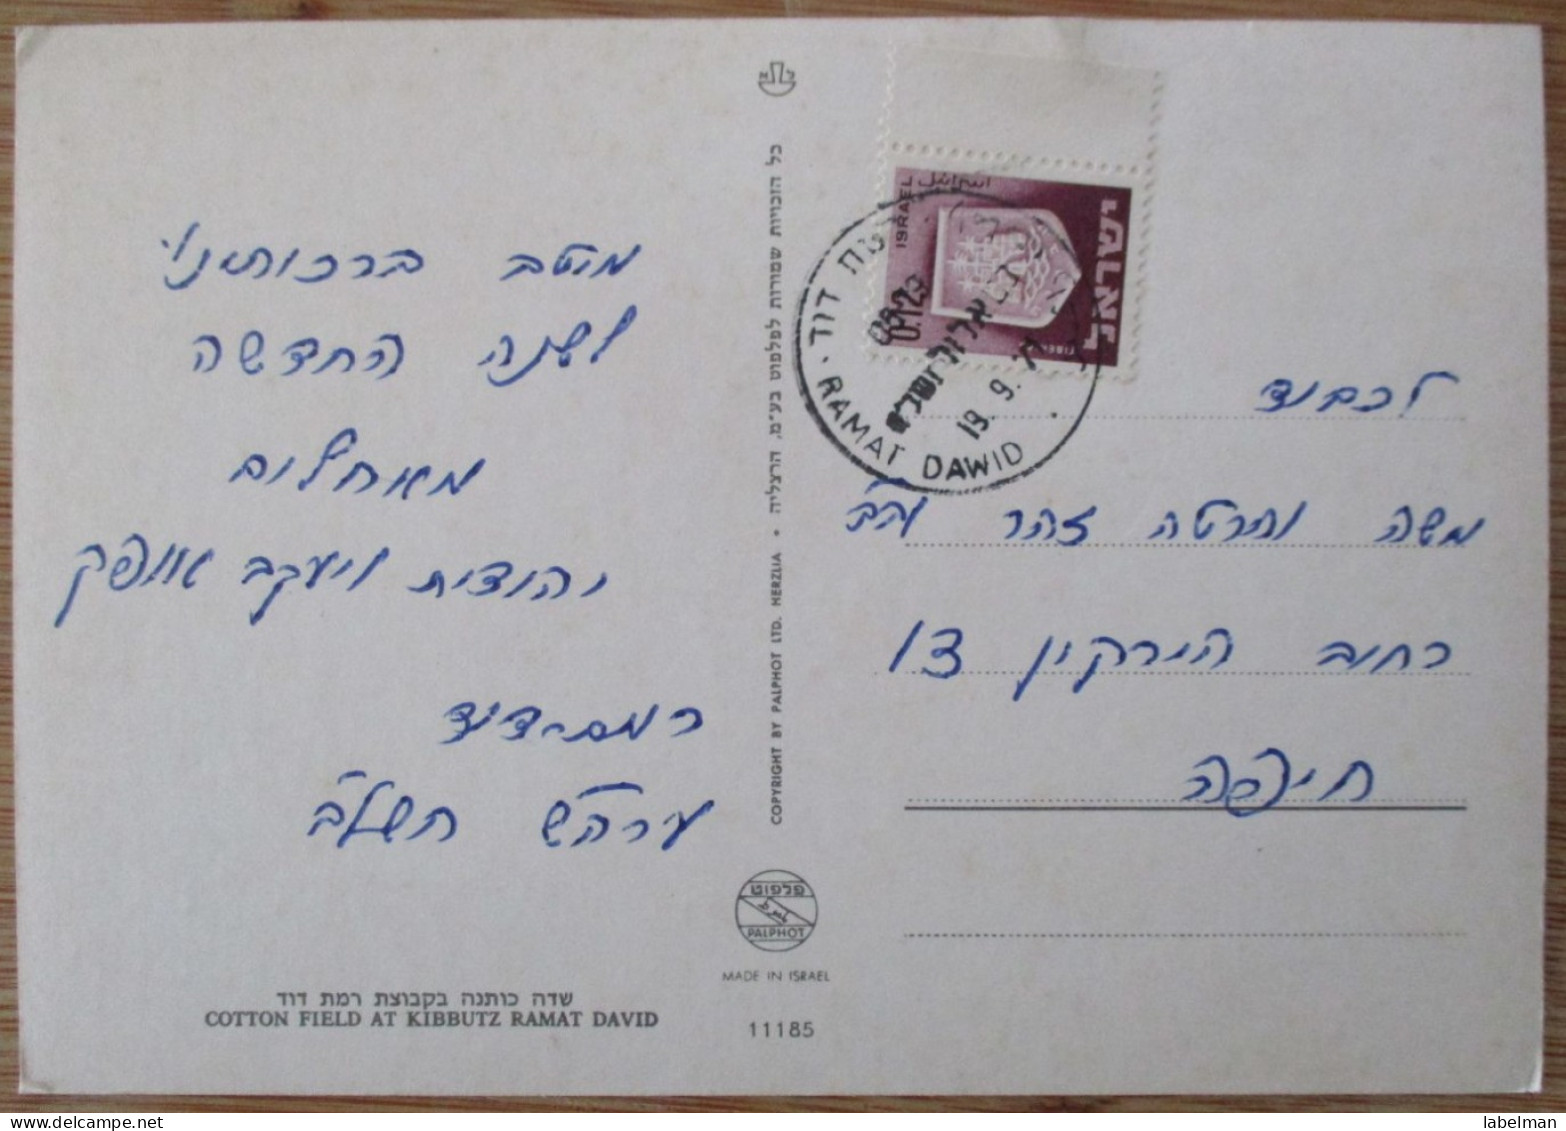 ISRAEL JEZREEL VALLEY KIBBUTZ RAMAT DAVID POSTCARD KARTE CARD ANSICHTSKARTE CARTOLINA CARTE POSTALE PC POSTKARTE - Israel